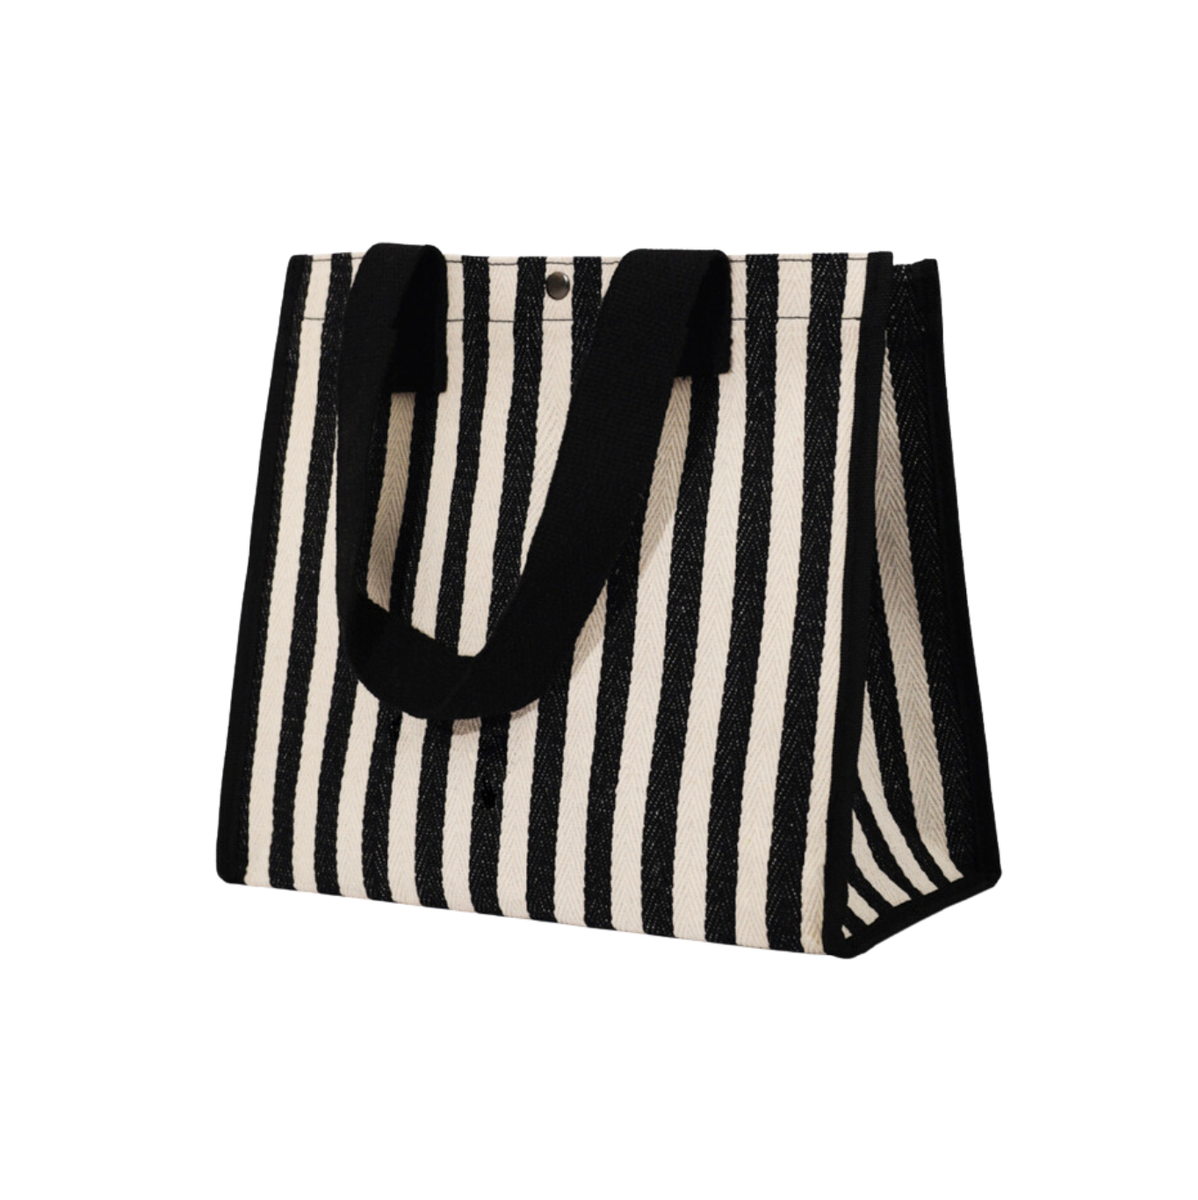 Striped Canvas Tote Bag | Shop Today. Get it Tomorrow! | takealot.com